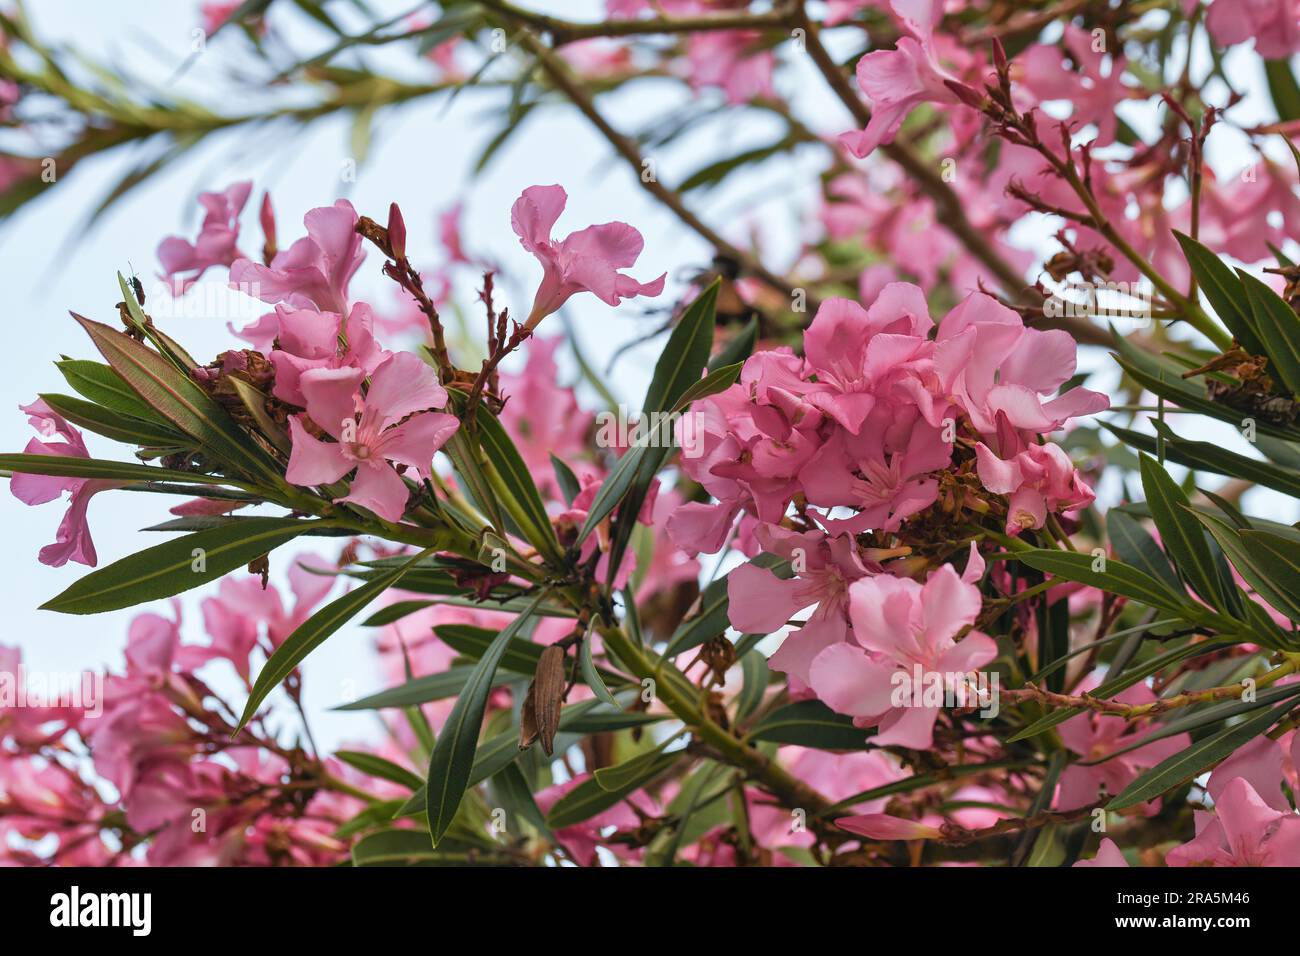 Rosa Blüten des oleanders Foto Stock